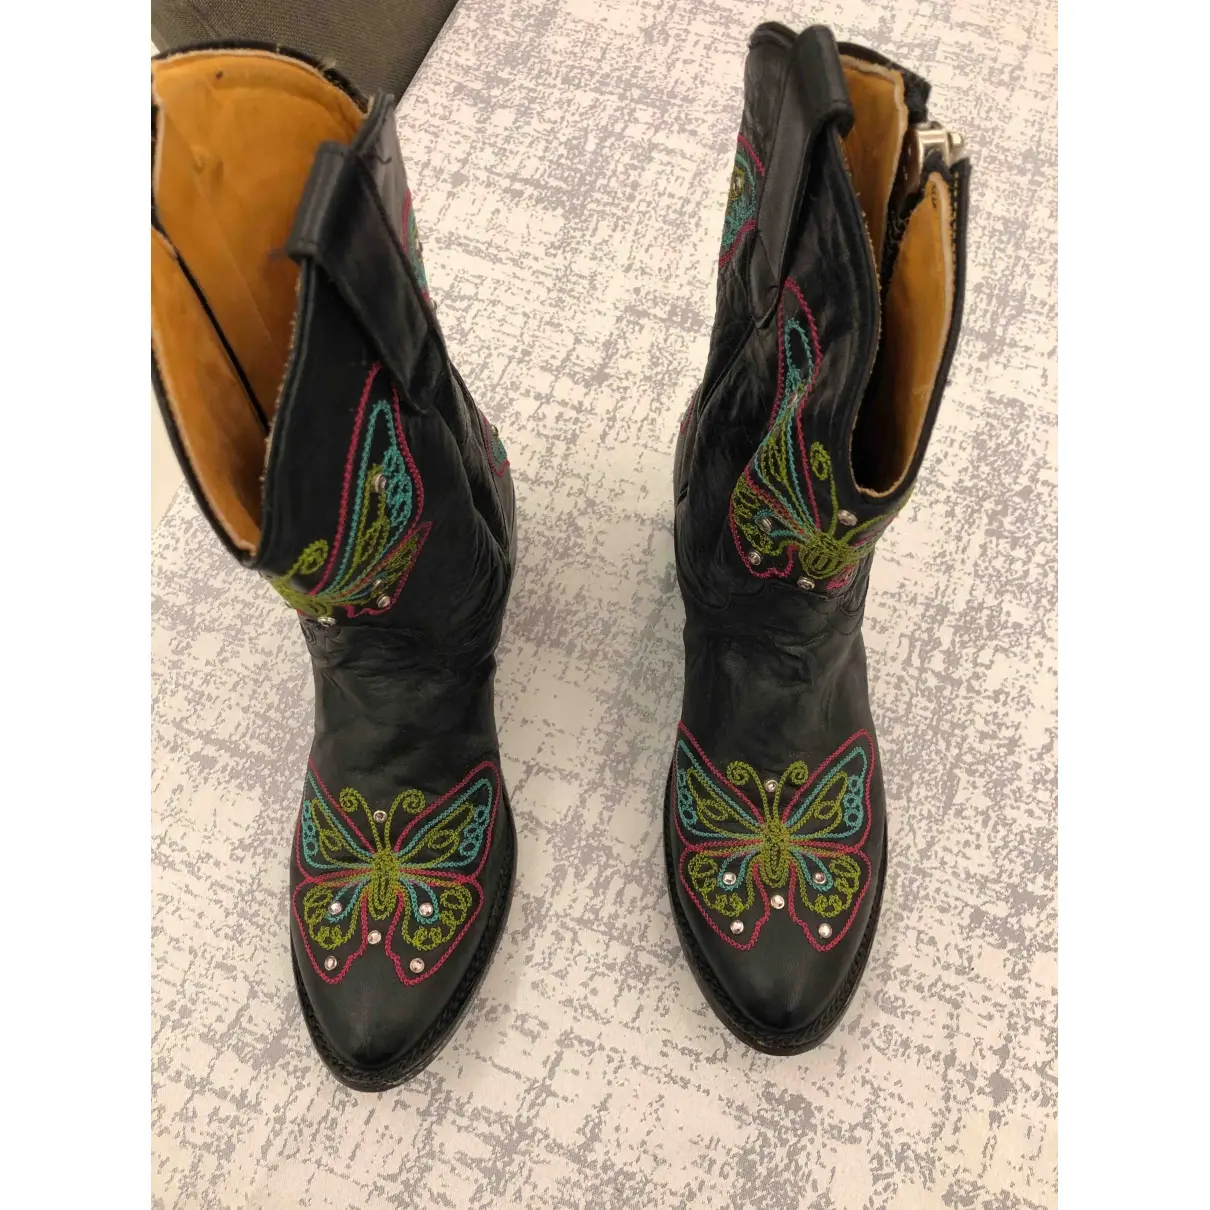 Luxury Old Gringo Boots Women